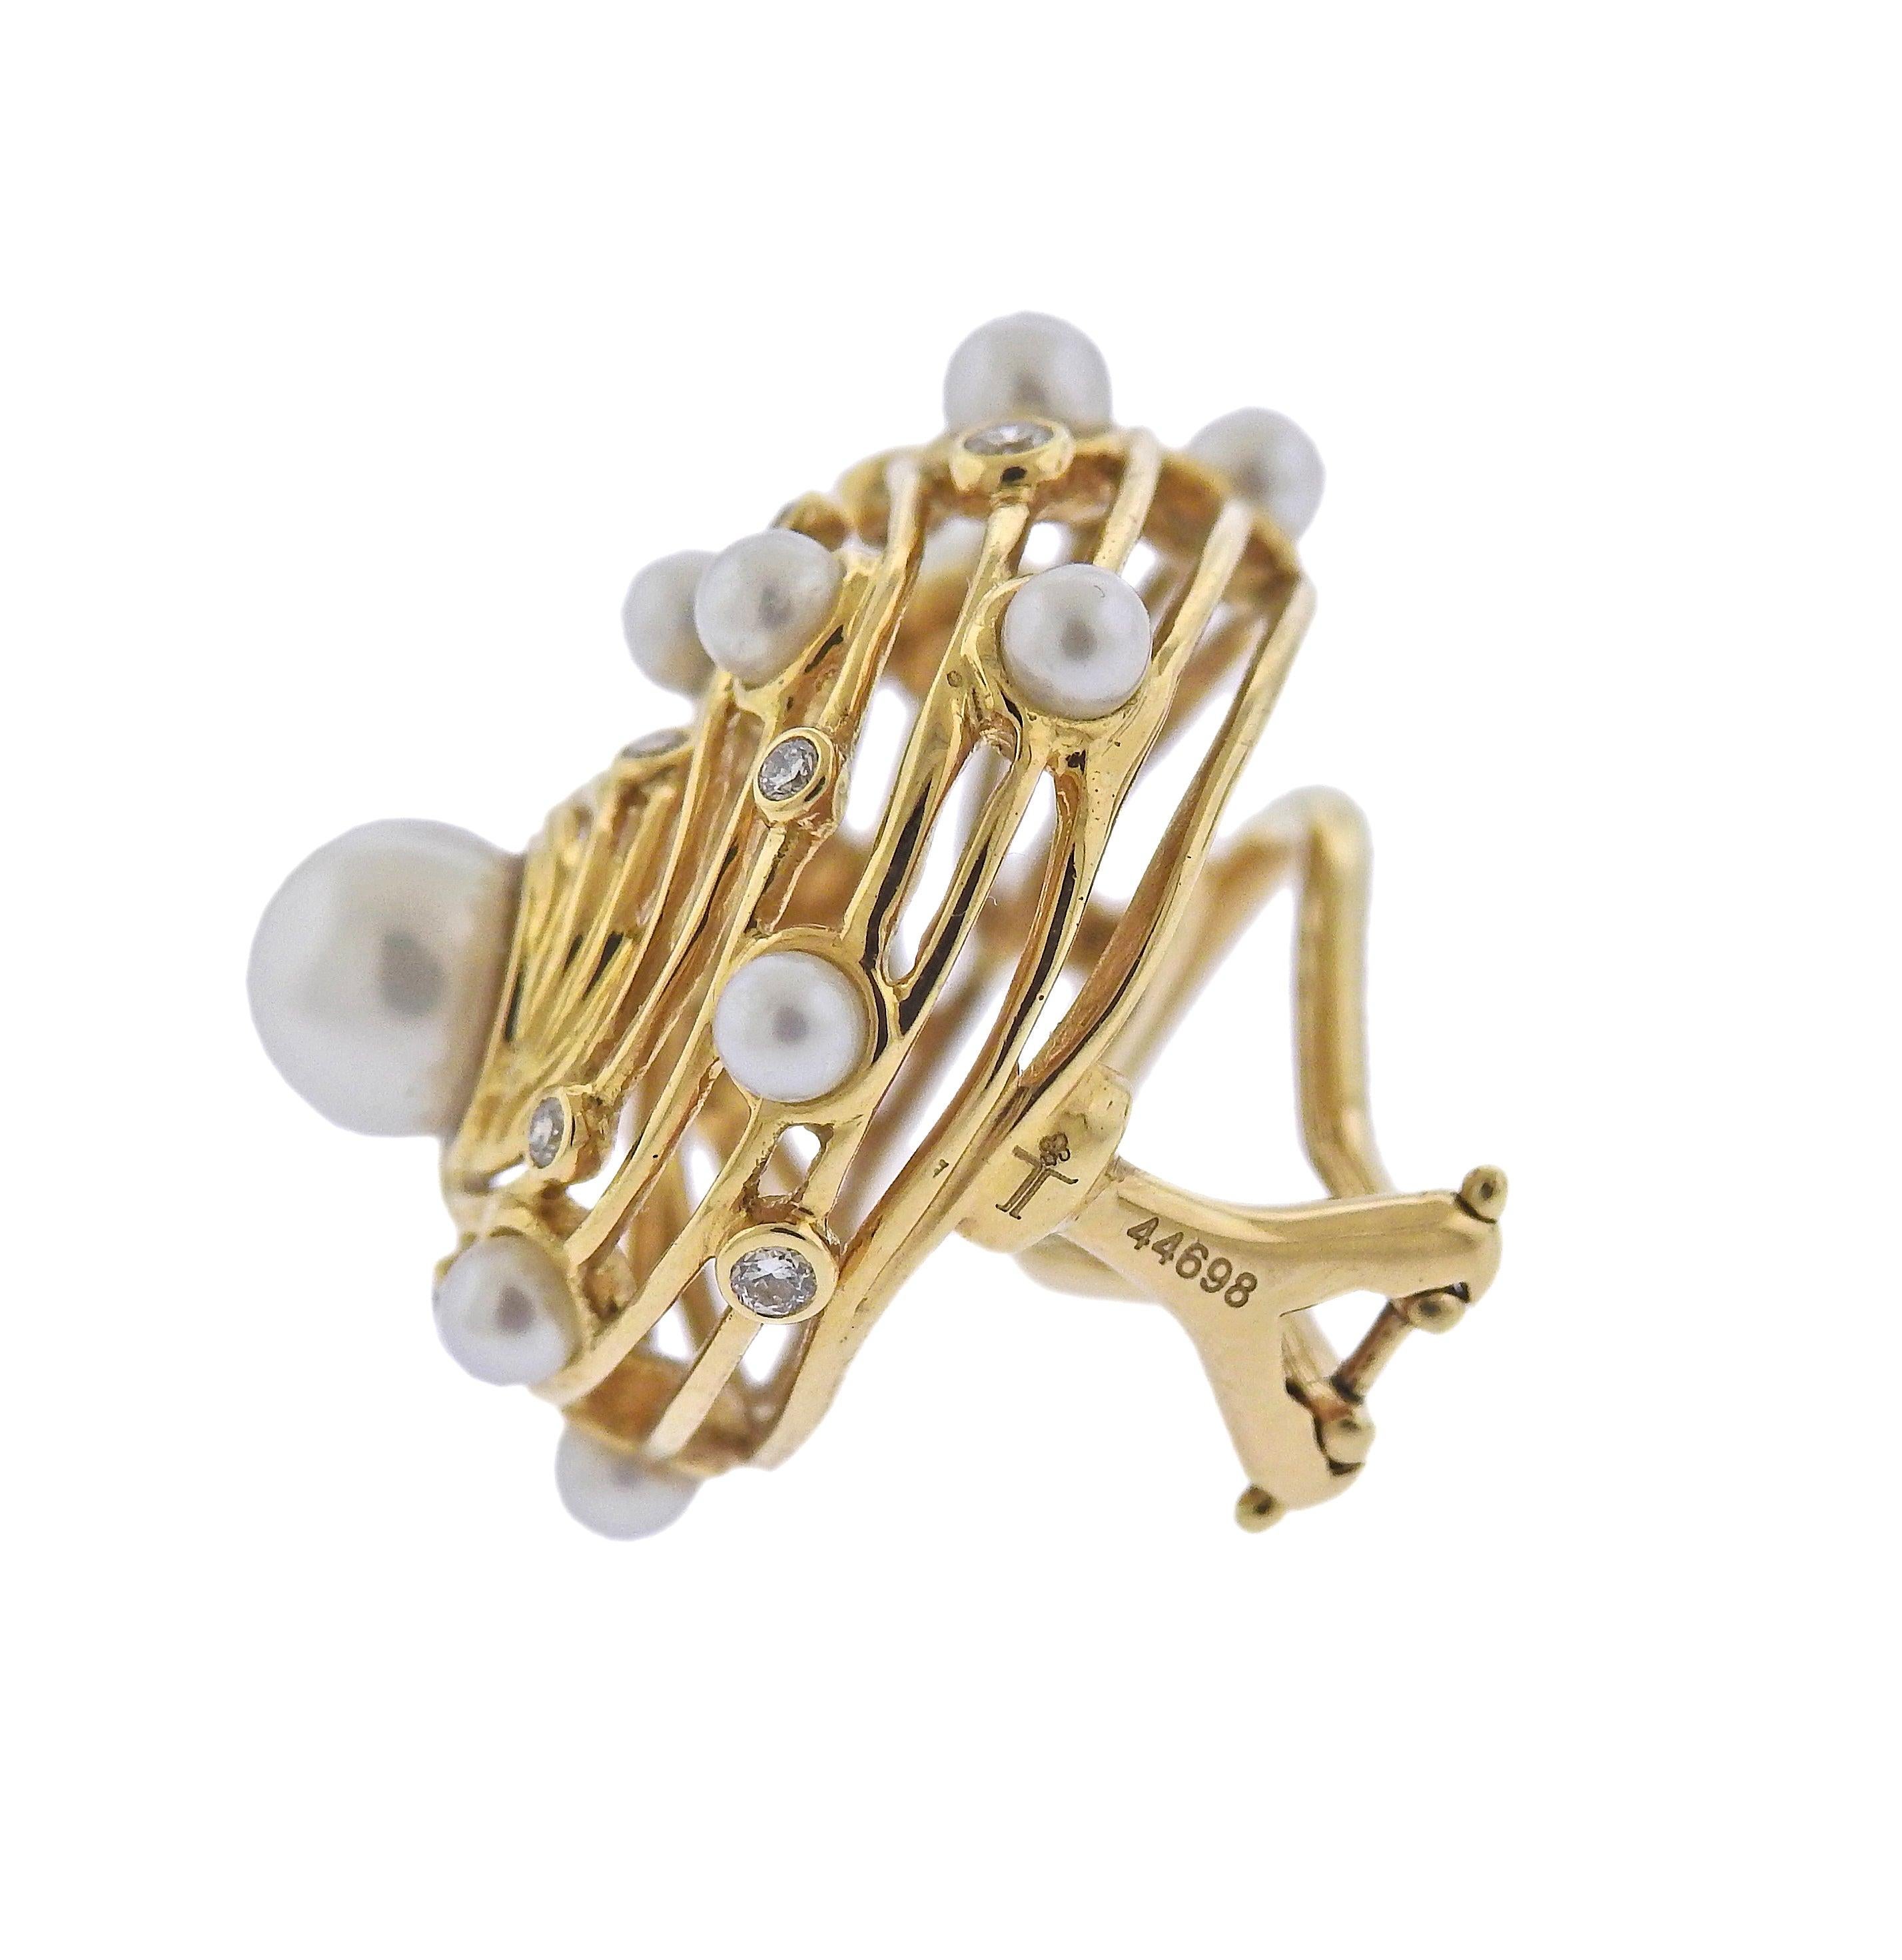 20mm pearl earrings